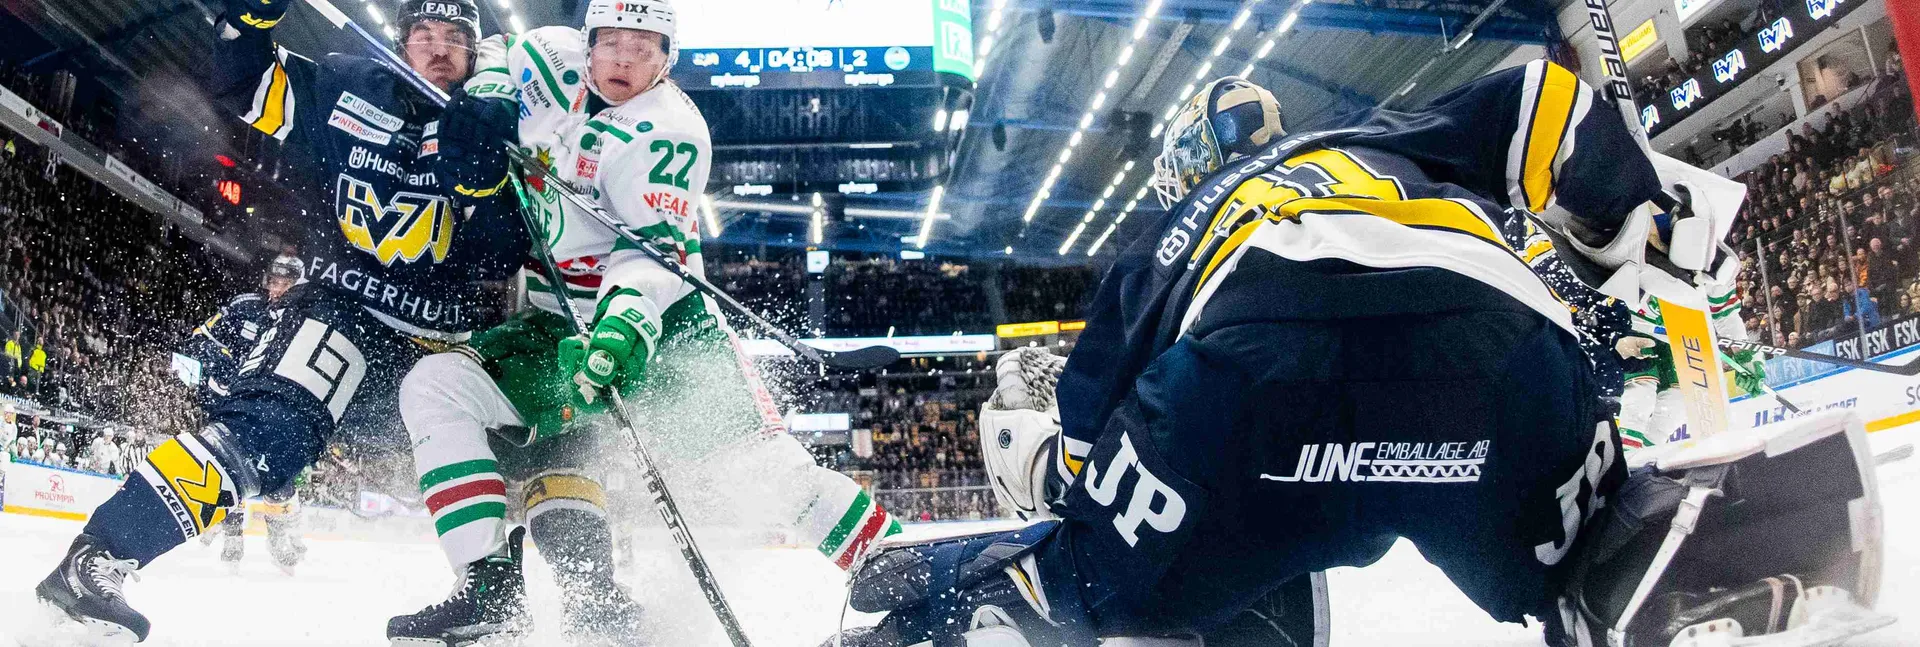 Ishockeymatch mellan HV71 och Rögle i SHL